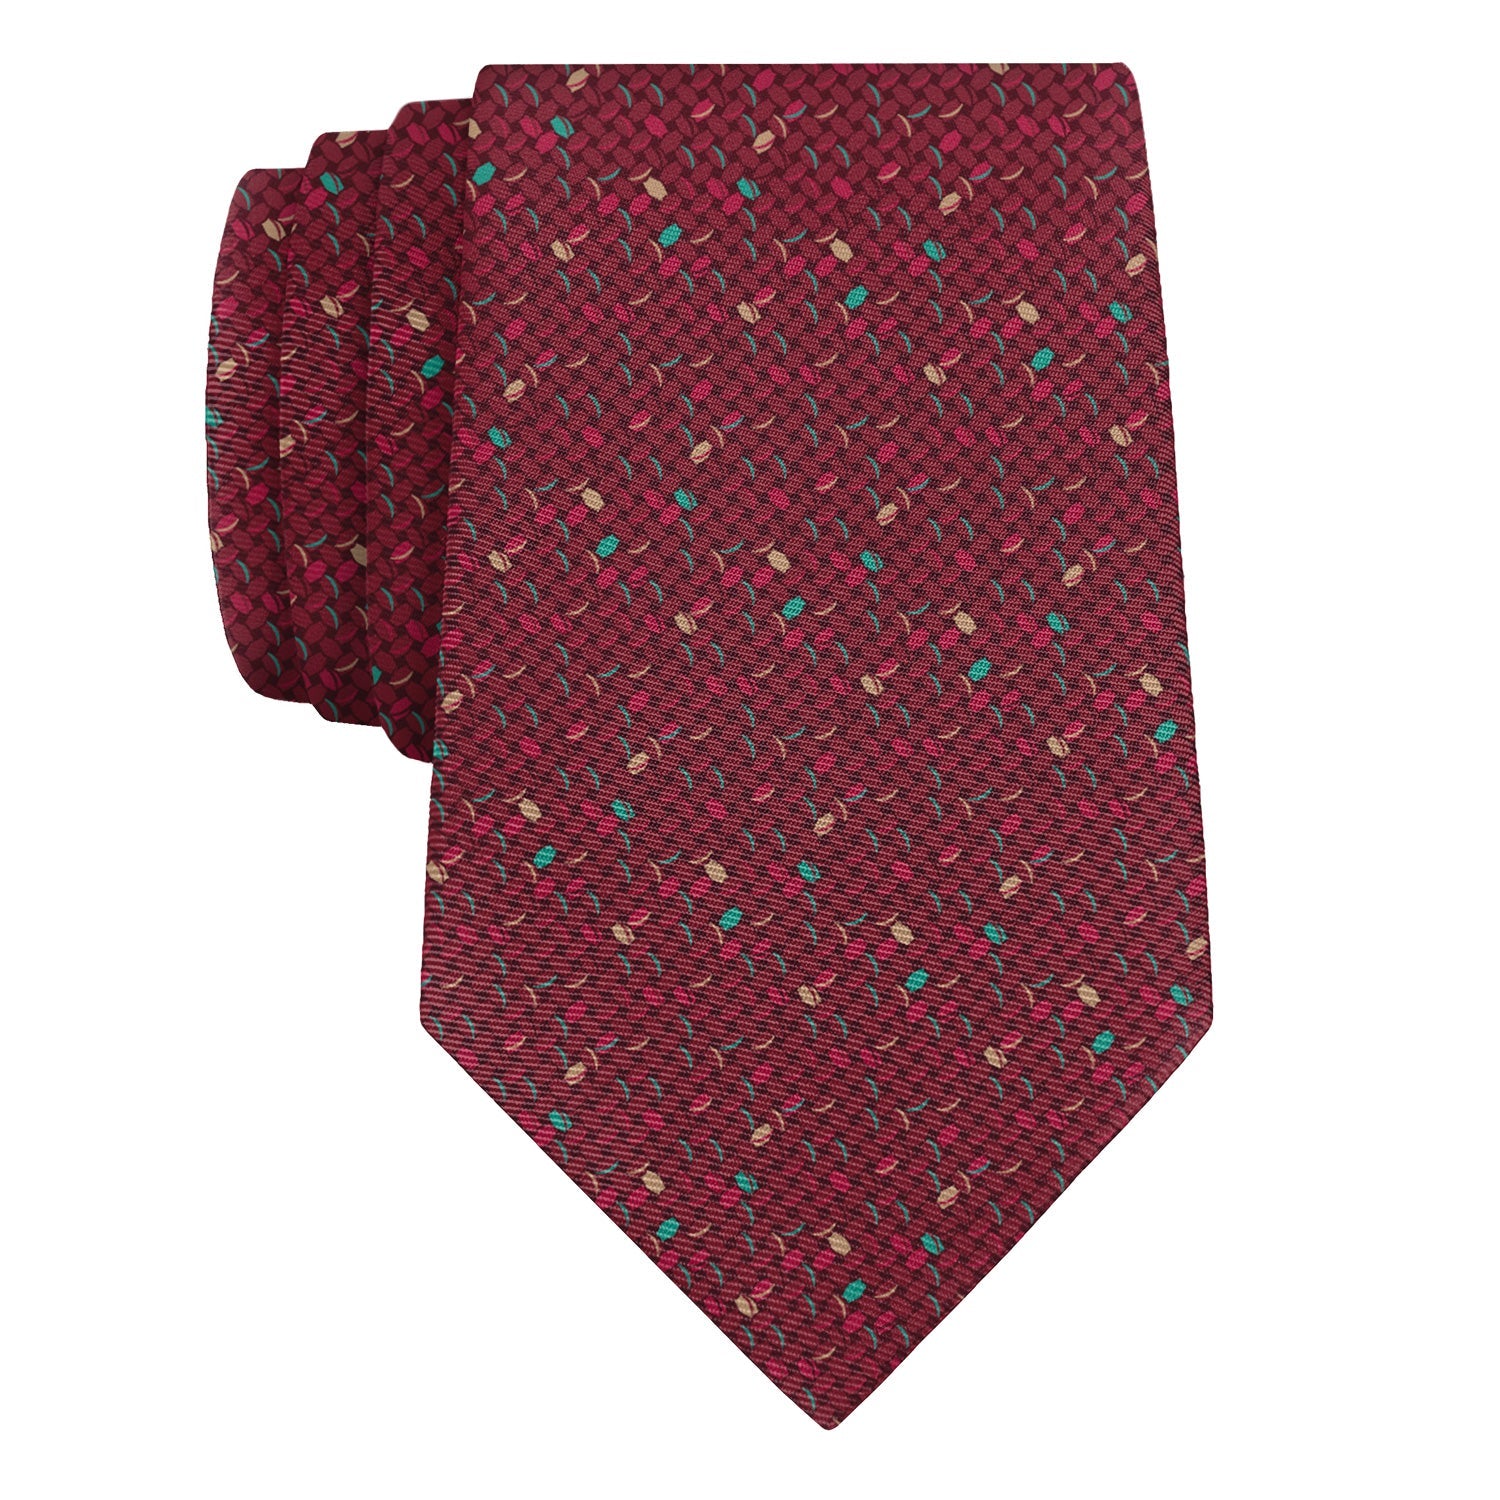 Speckled Necktie - Knotty 2.75" -  - Knotty Tie Co.